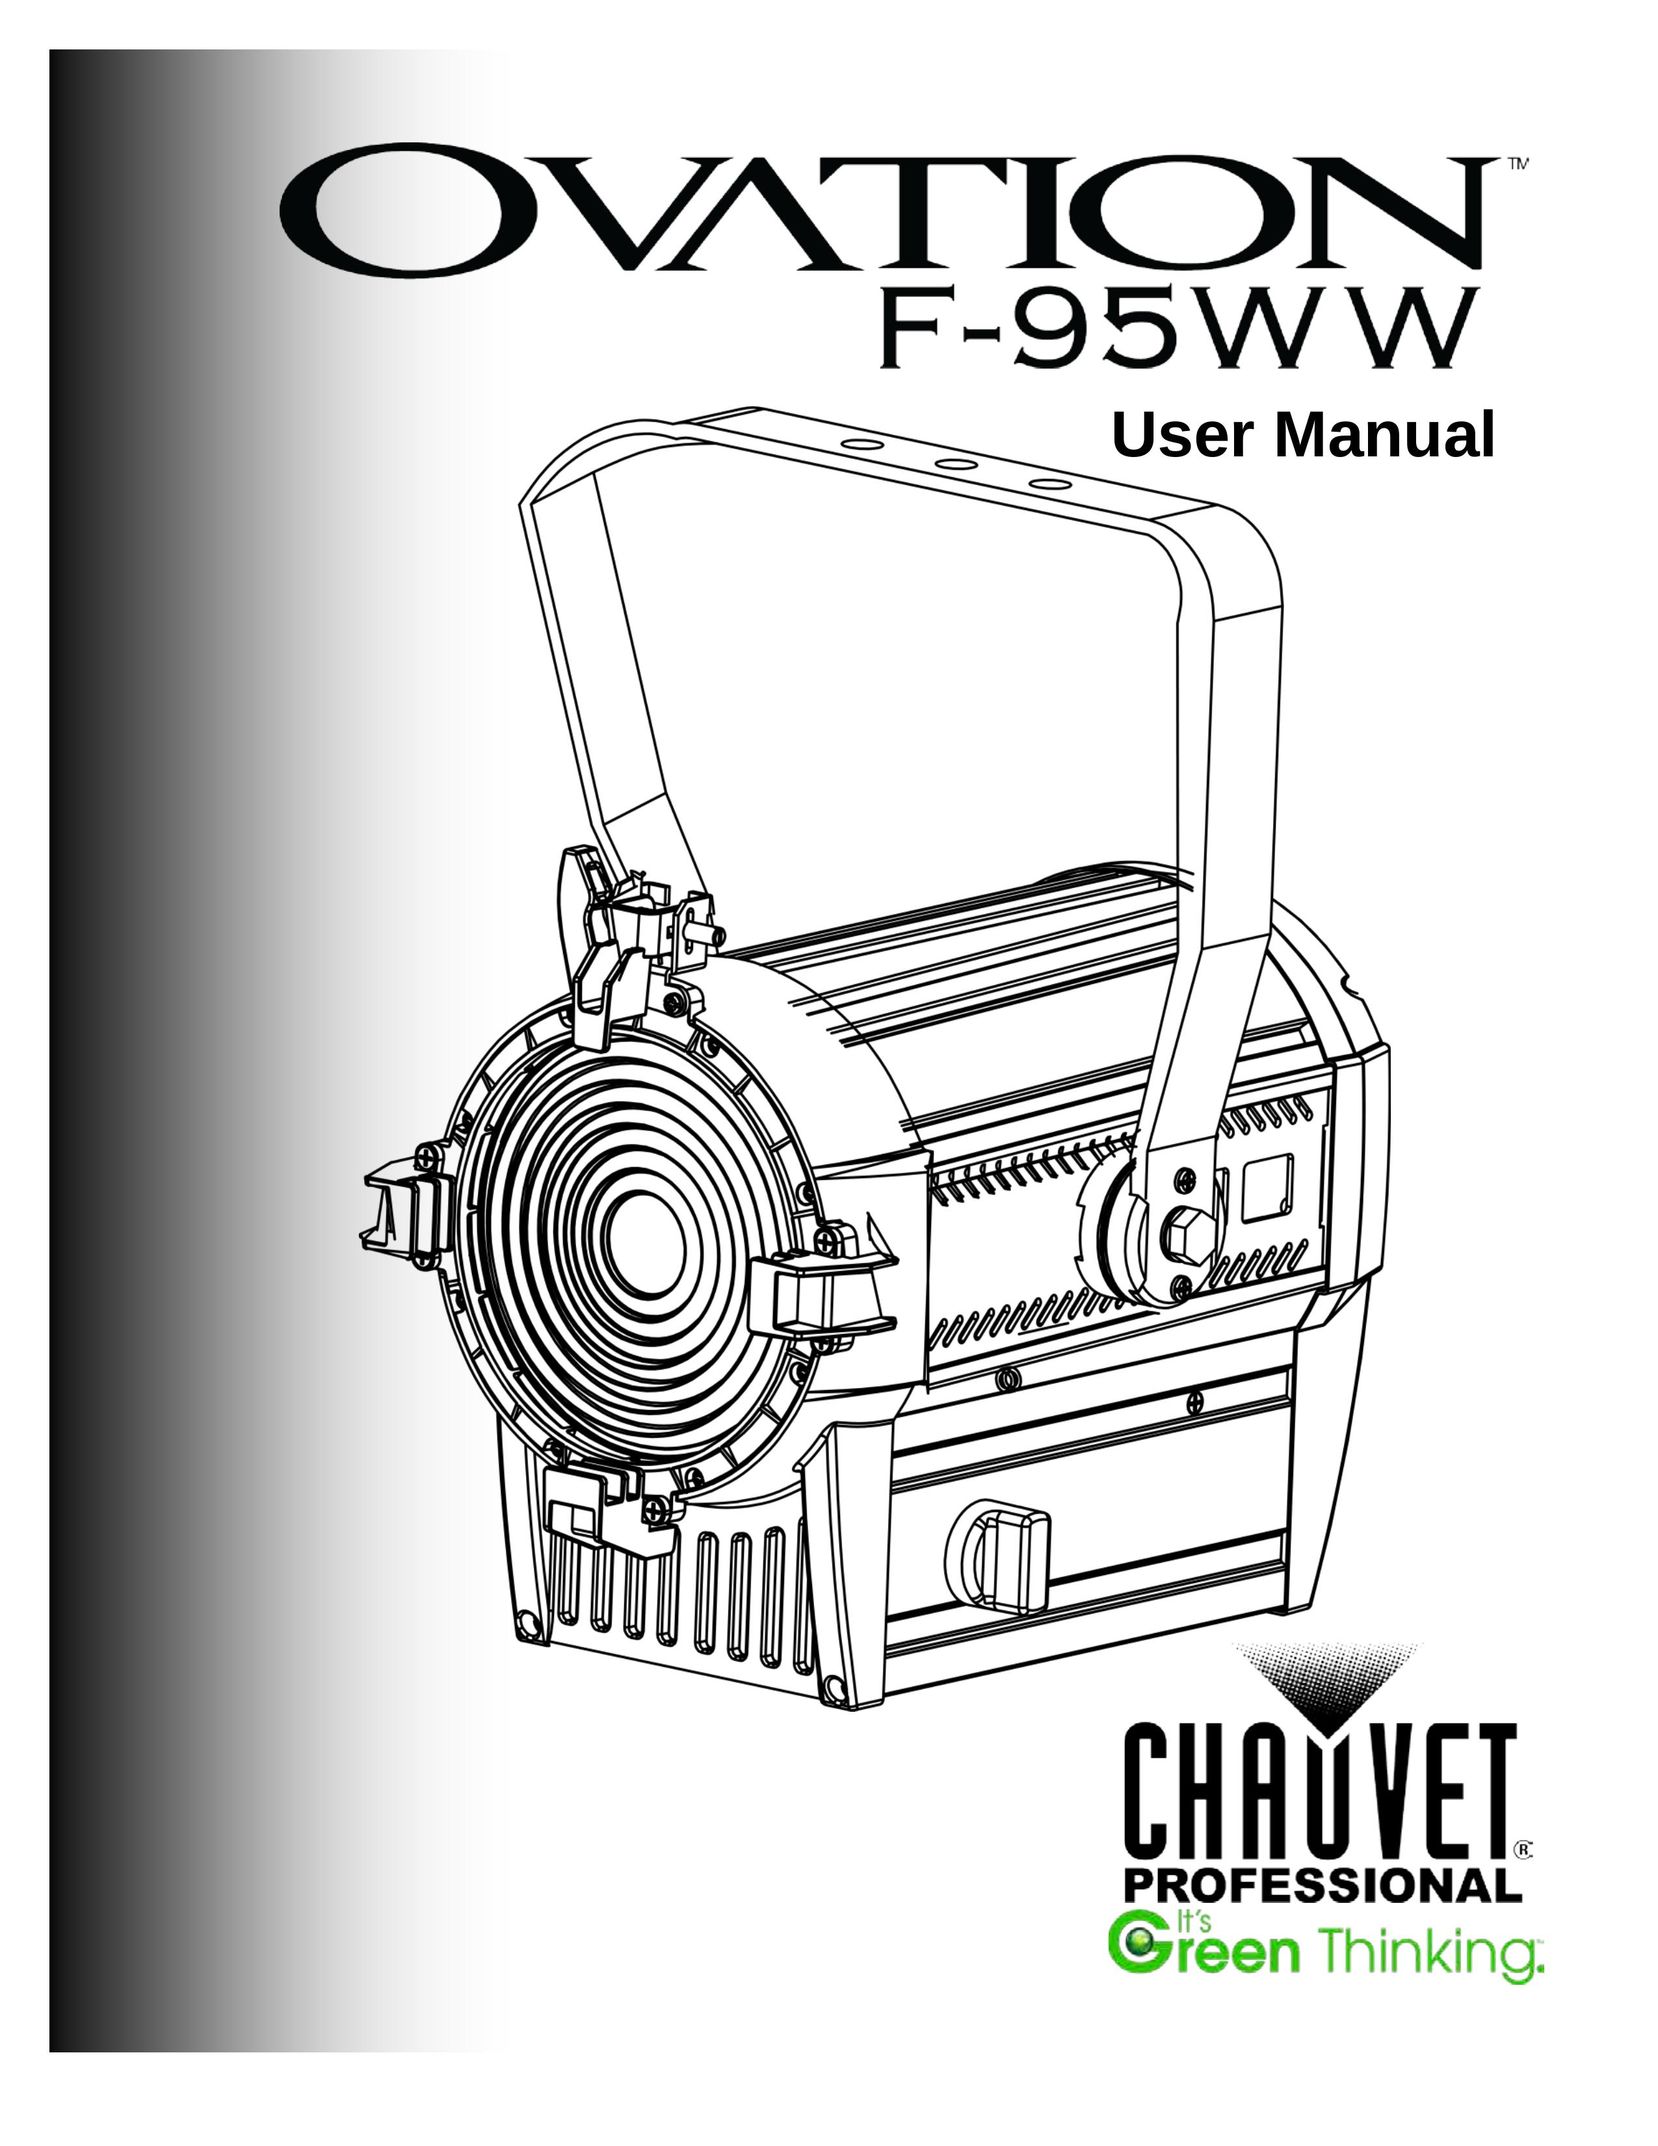 Chauvet f-95ww Computer Drive User Manual